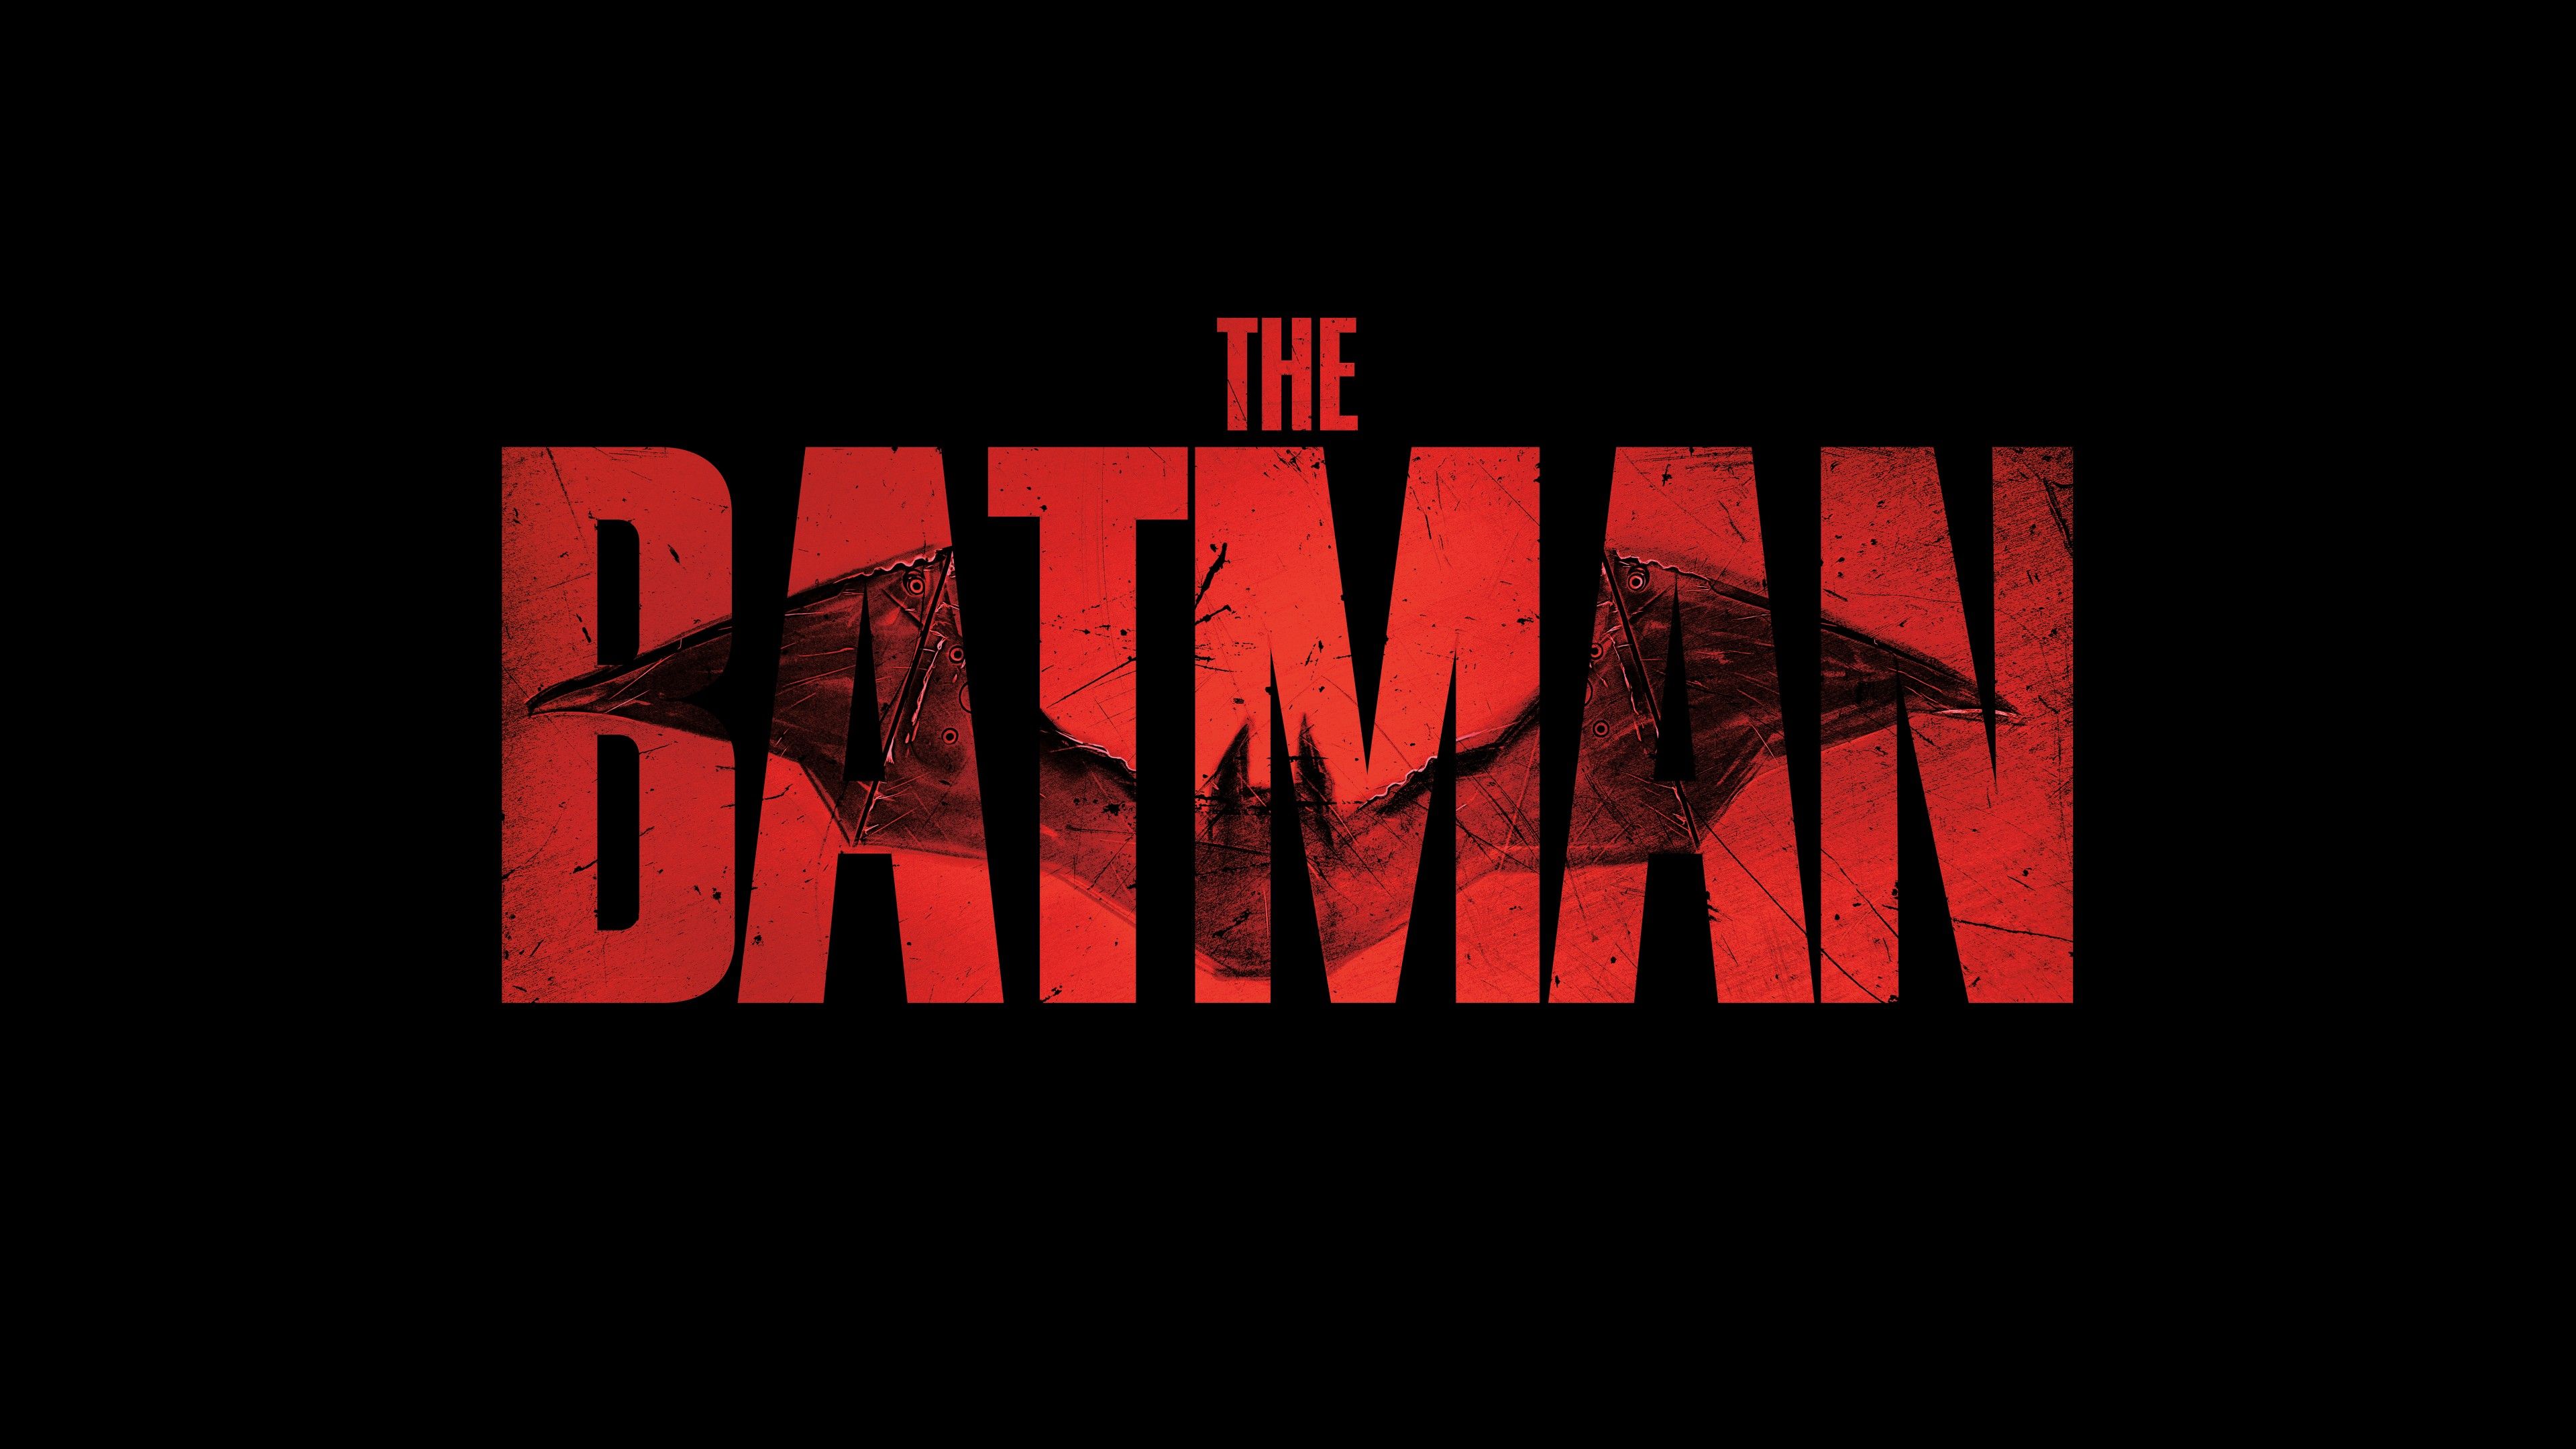 The Batman 4K Wallpaper, 2021 Movies, DC Comics, Black Background, 5K, 8K, Black Dark